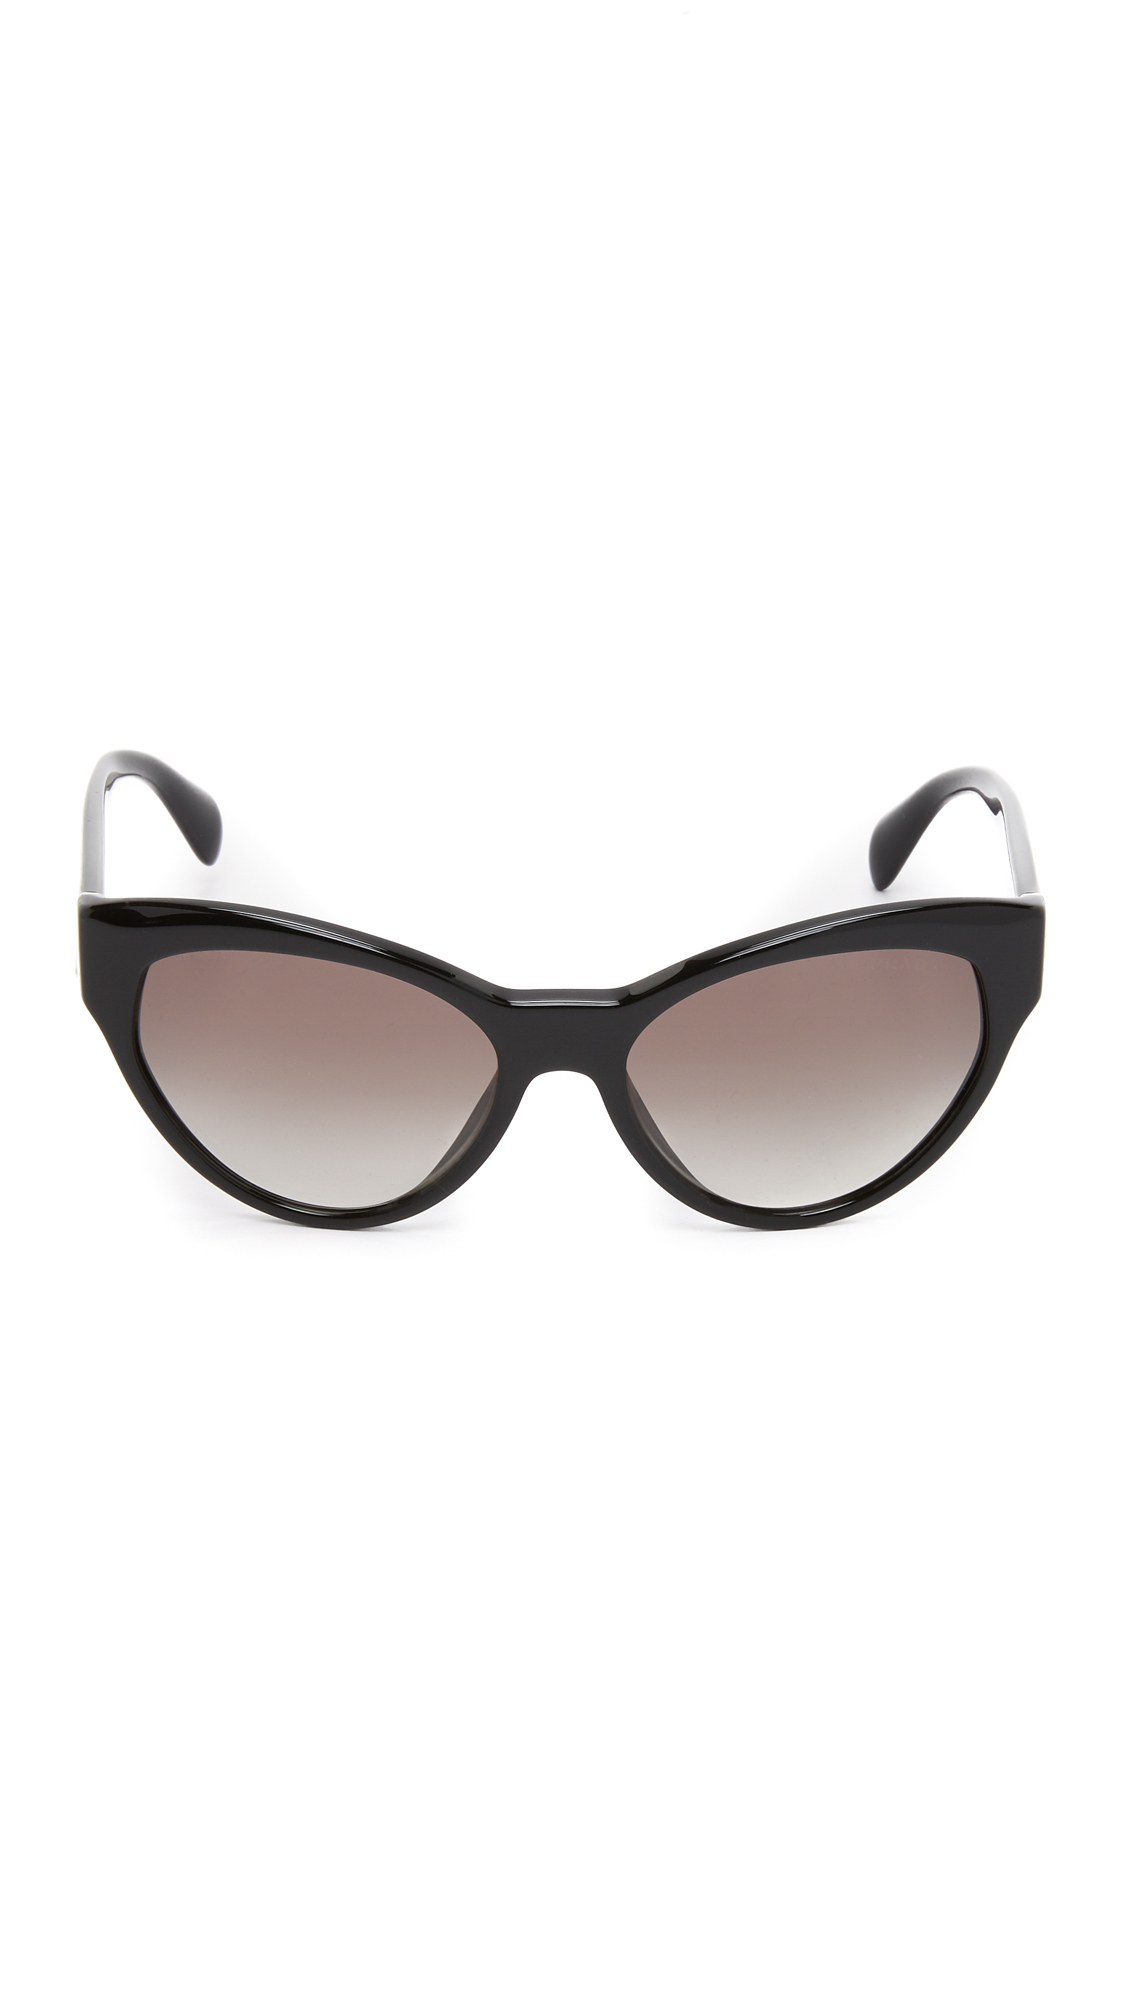 Lyst - Prada Cat Eye Sunglasses in Black